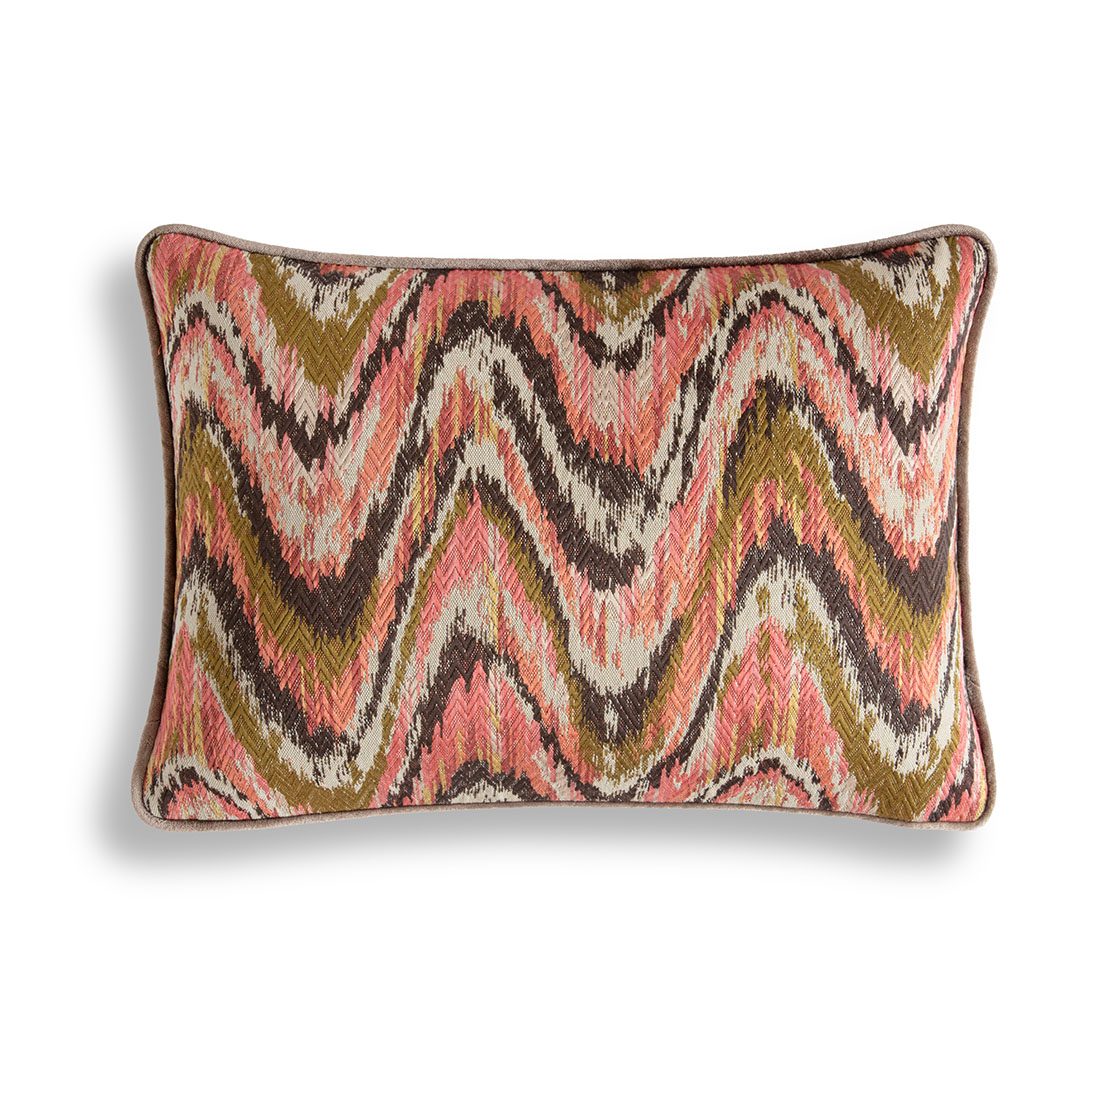 Kyma cushion - Flamingo backed and piped in Capri silk velvet - Bokhara - Beaumont & Fletcher